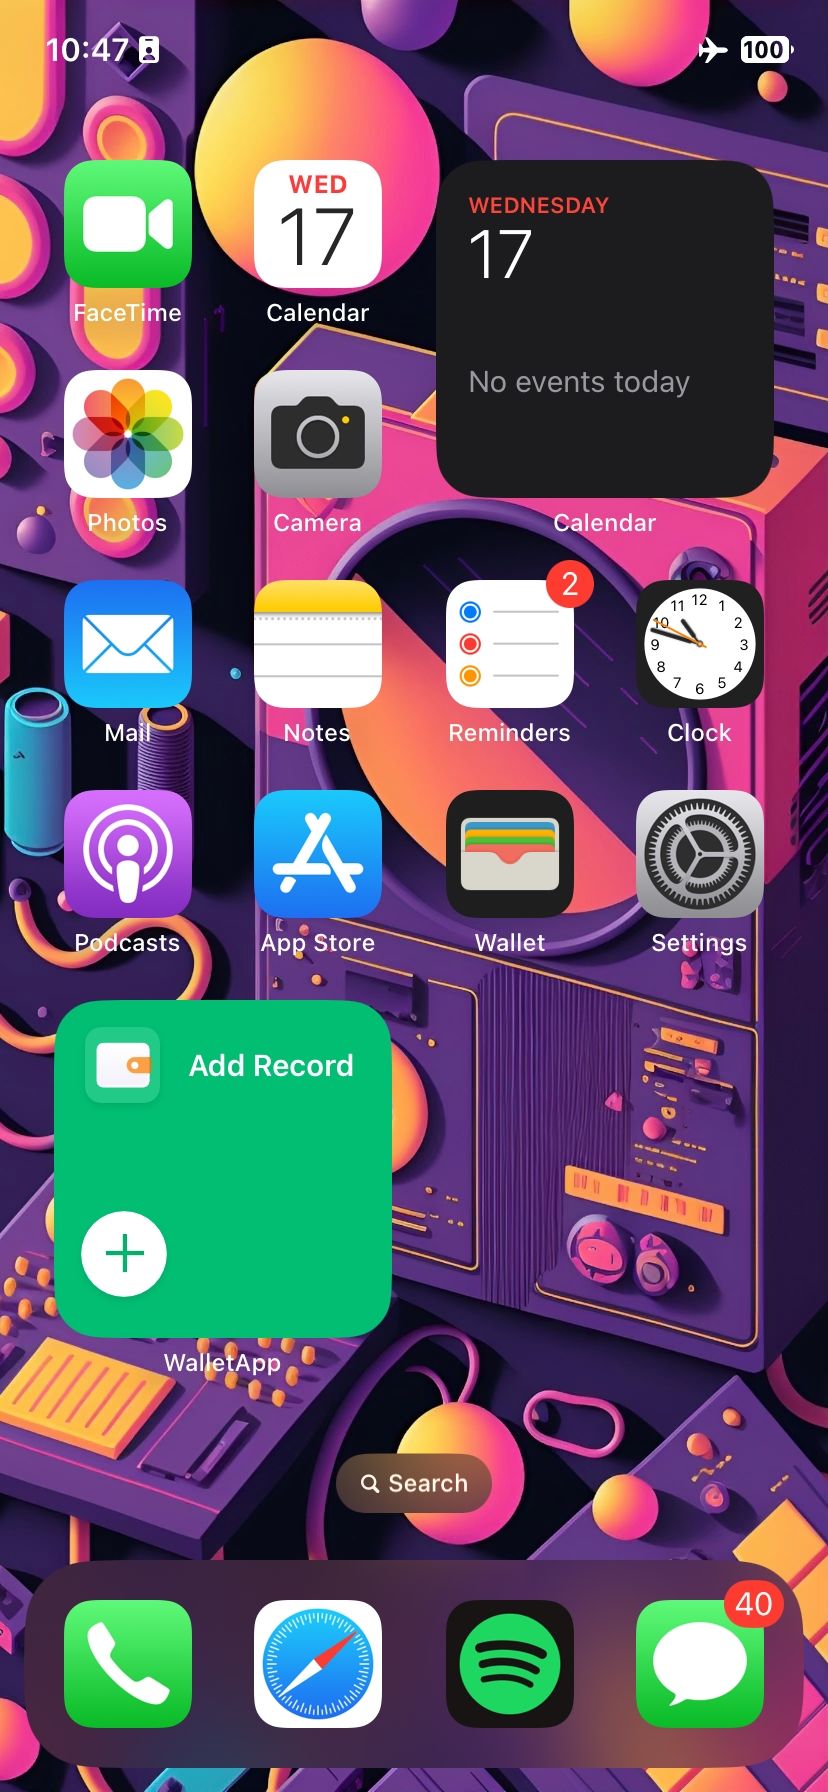 An iPhone's Home Screen in iOS 16